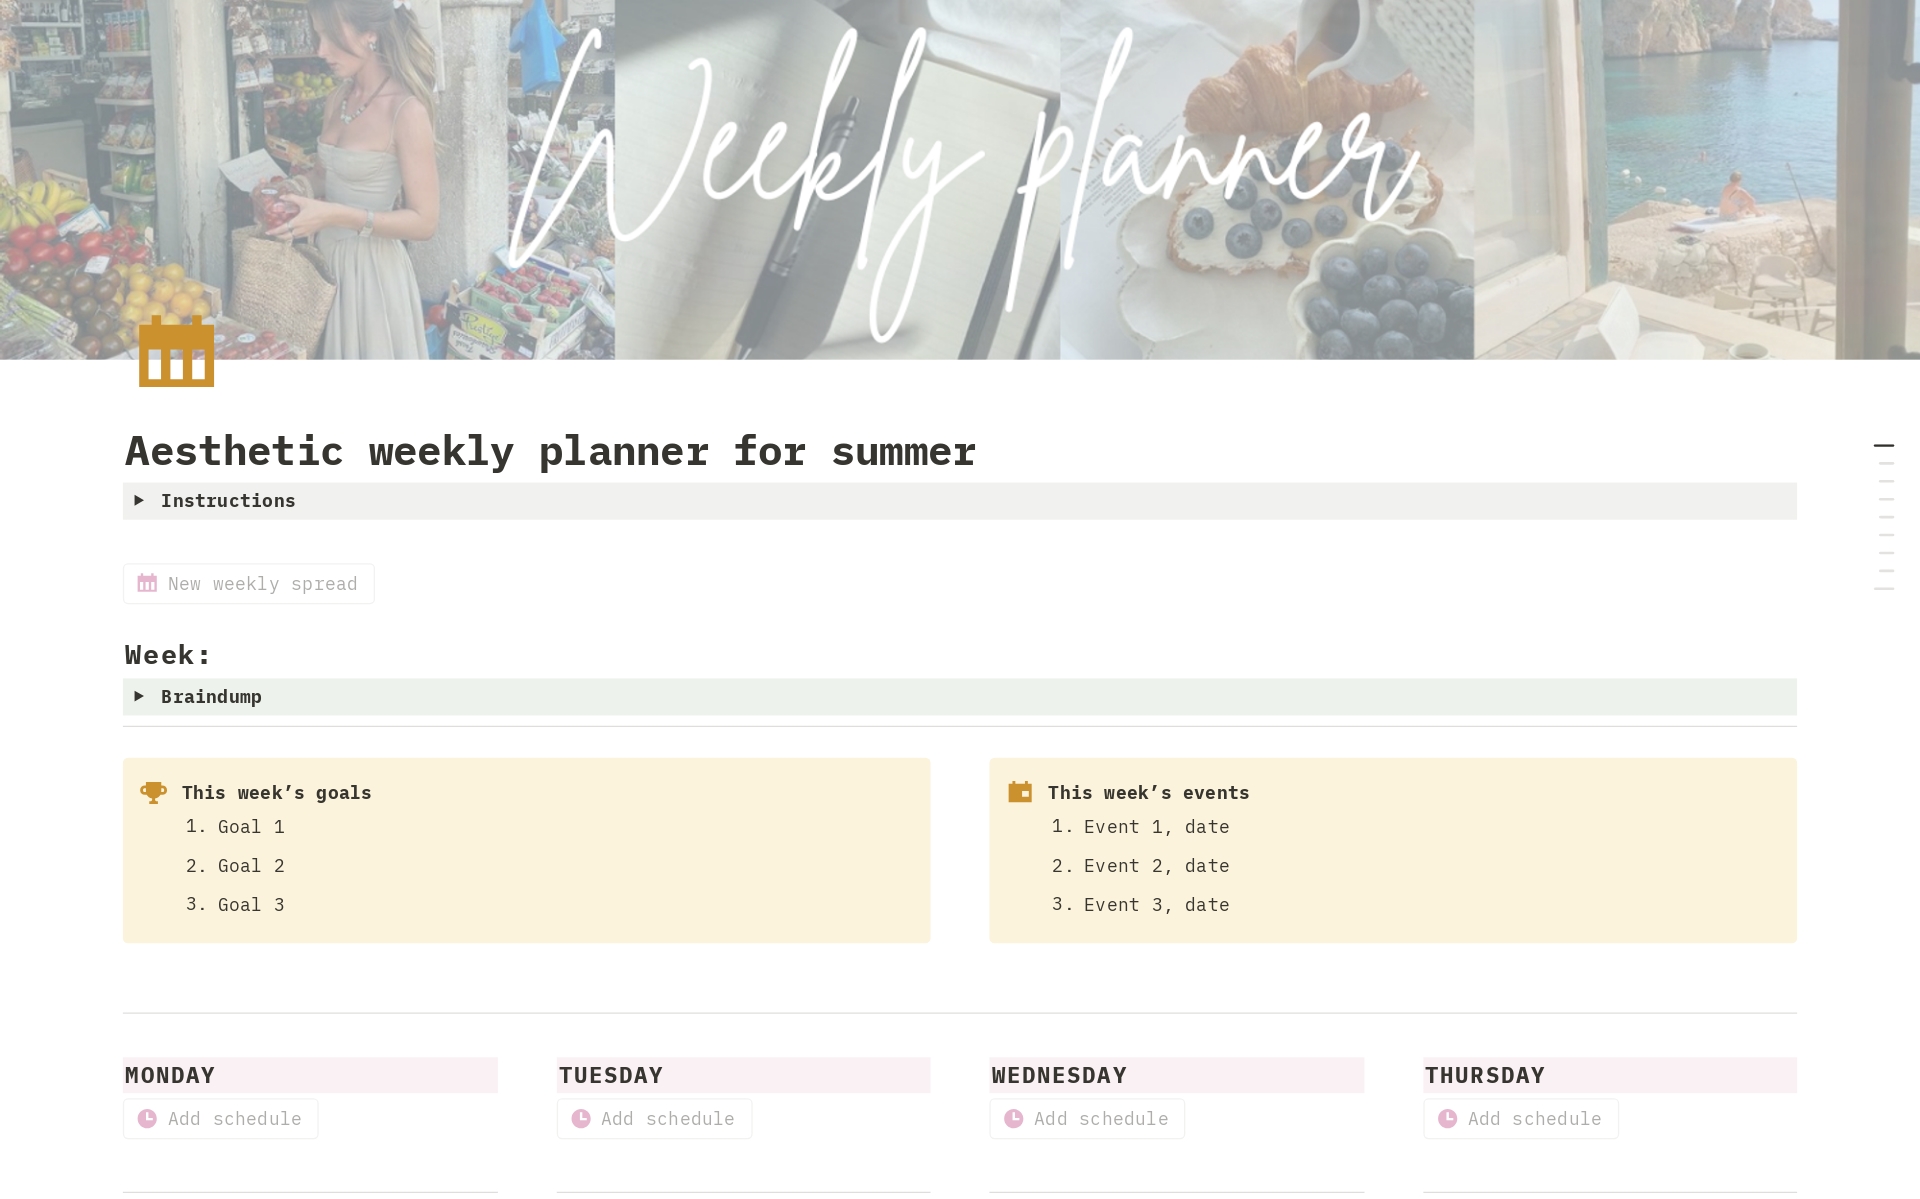 Aesthetic weekly planner for summerのテンプレートのプレビュー